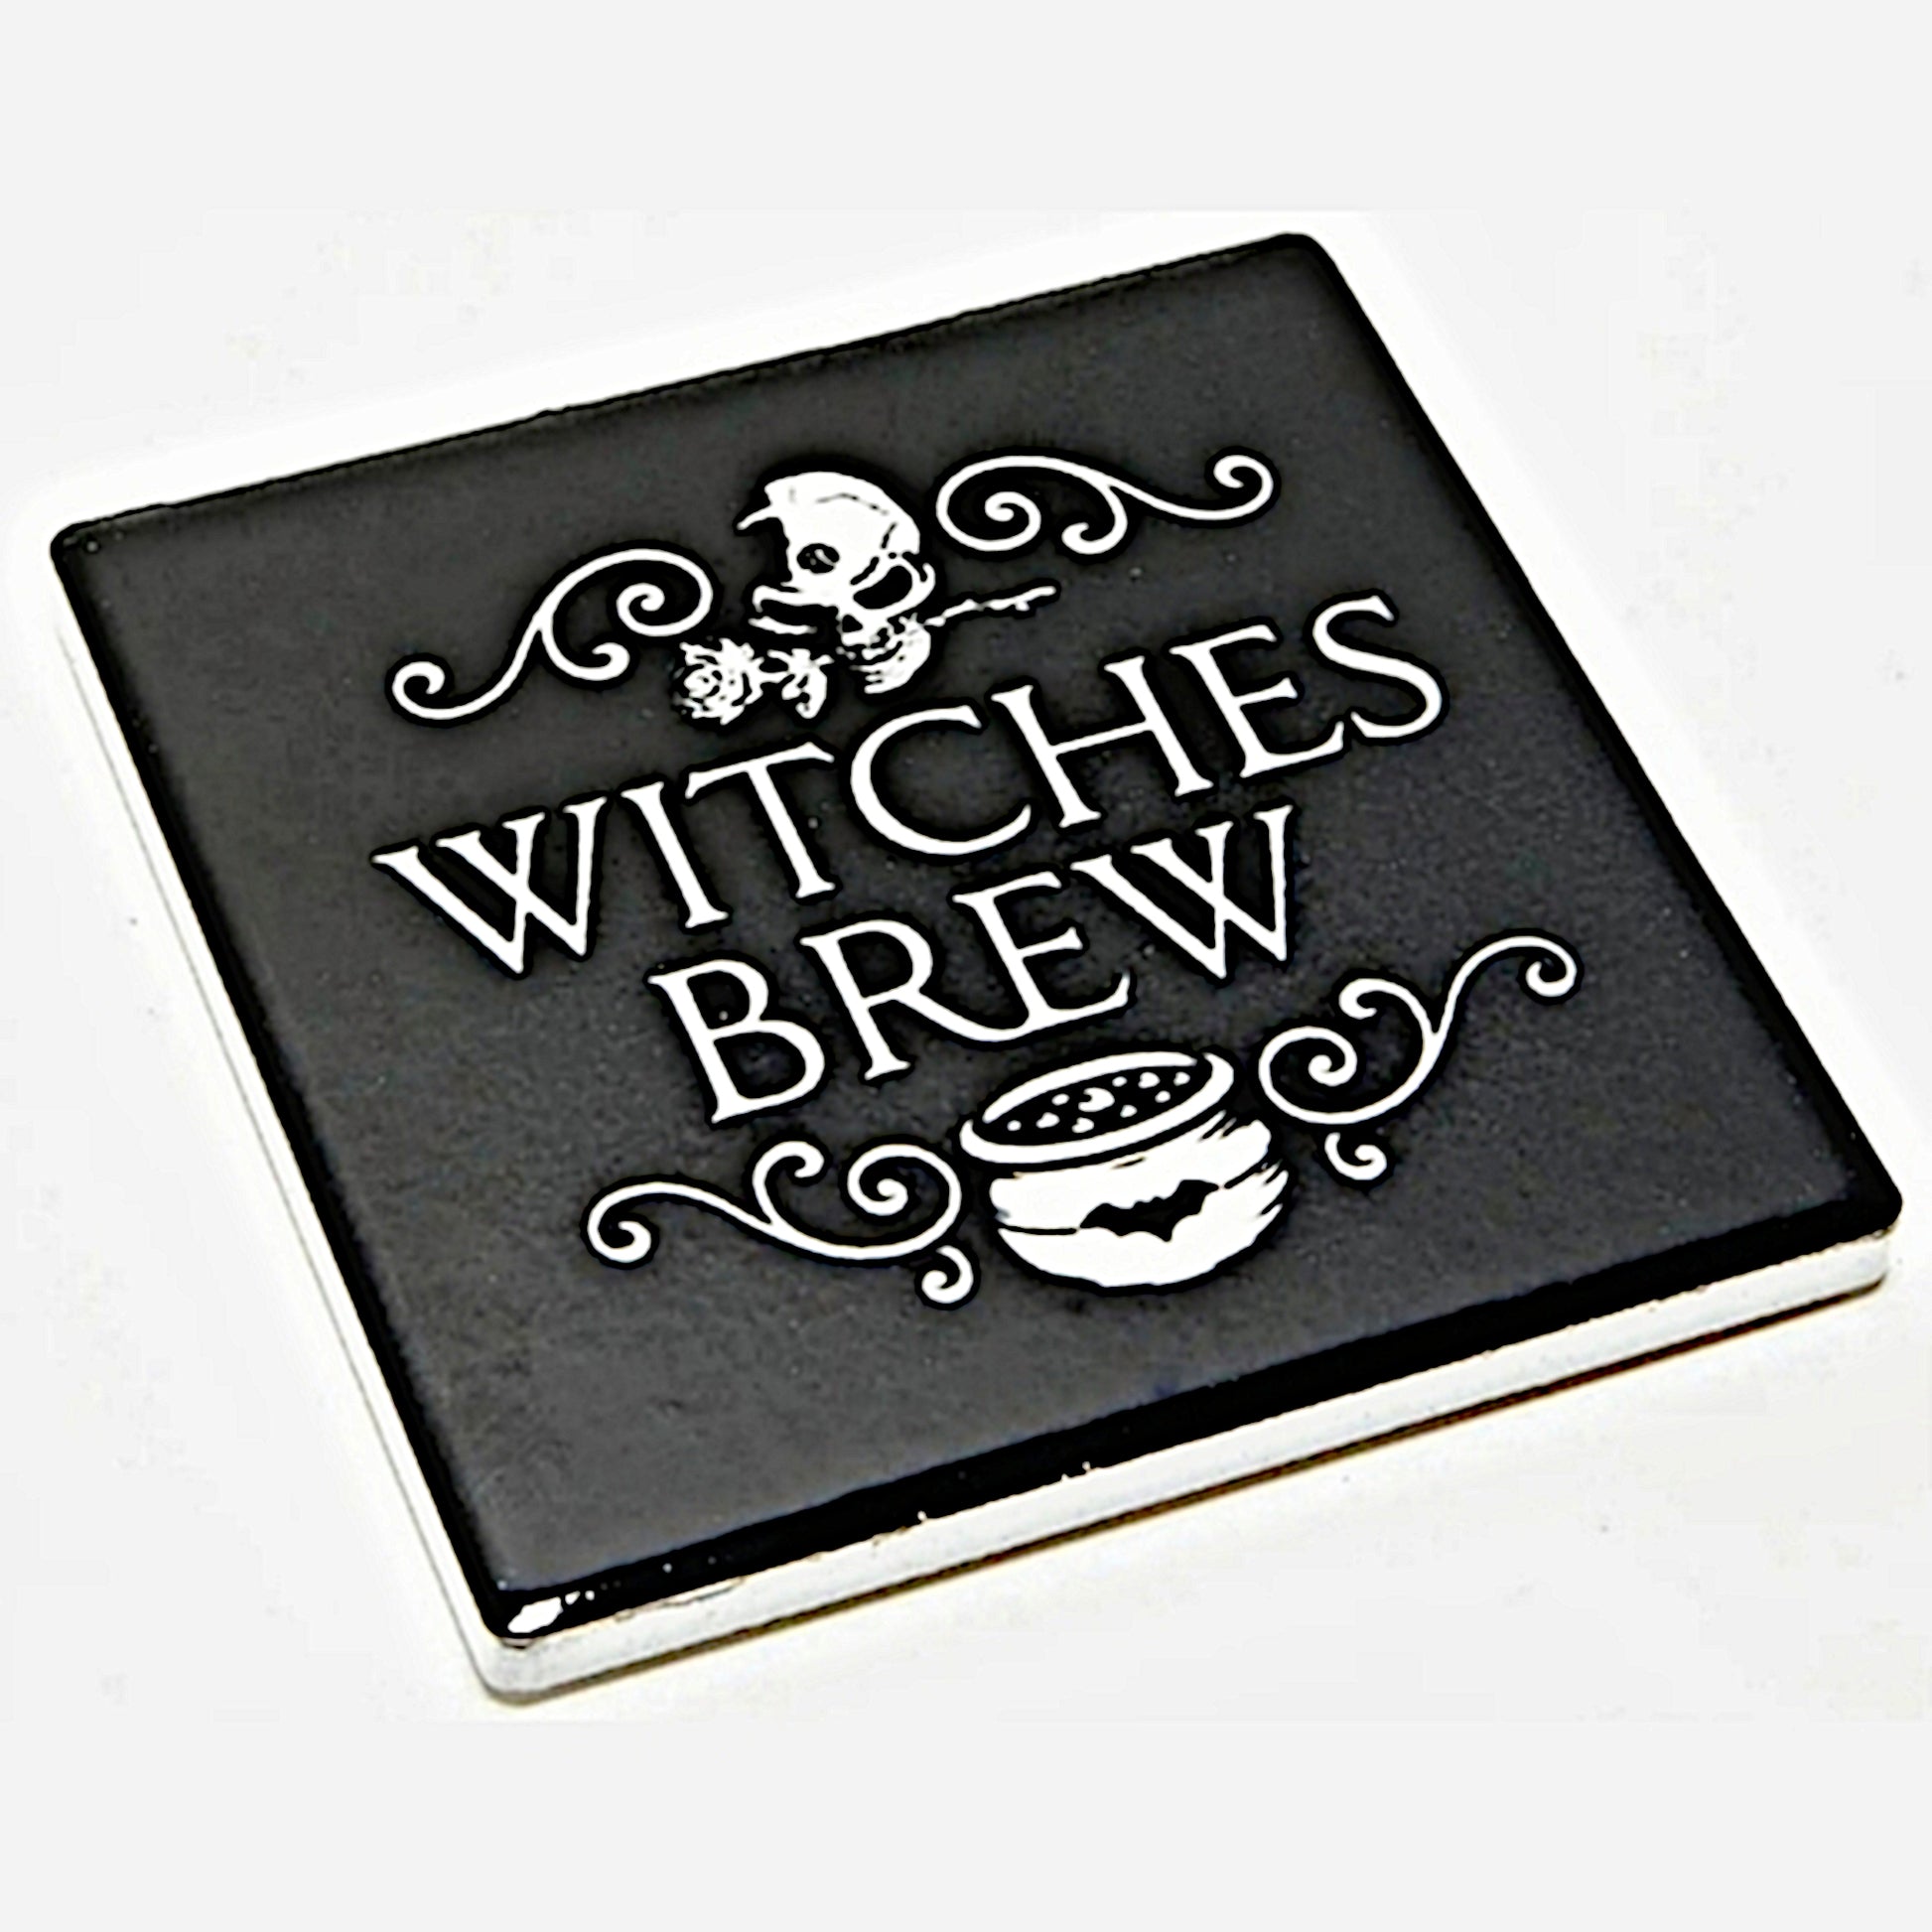 Witches Brew Coaster | High Quality Black & White Ceramic Coaster - Alchemy Gothic - Coasters